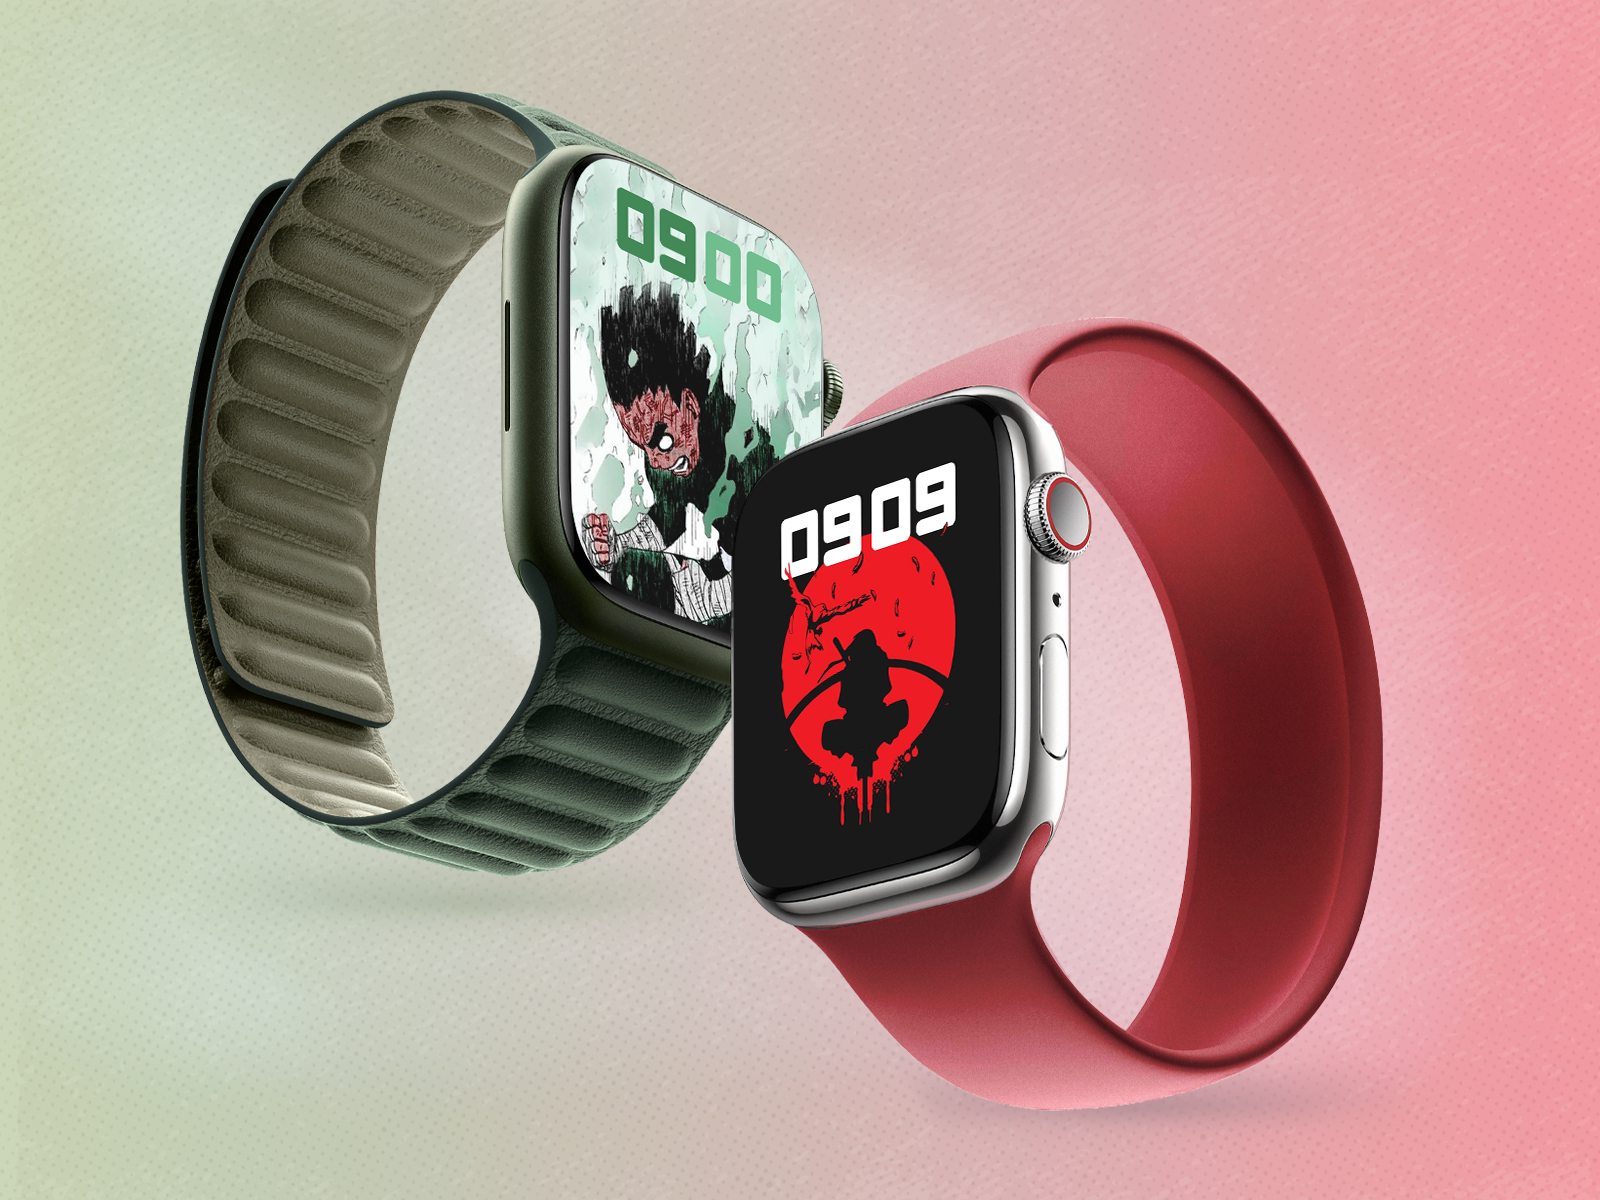 Naruto Watch Faces I Apple Watch by Eduardo Sampaio on Dribbble